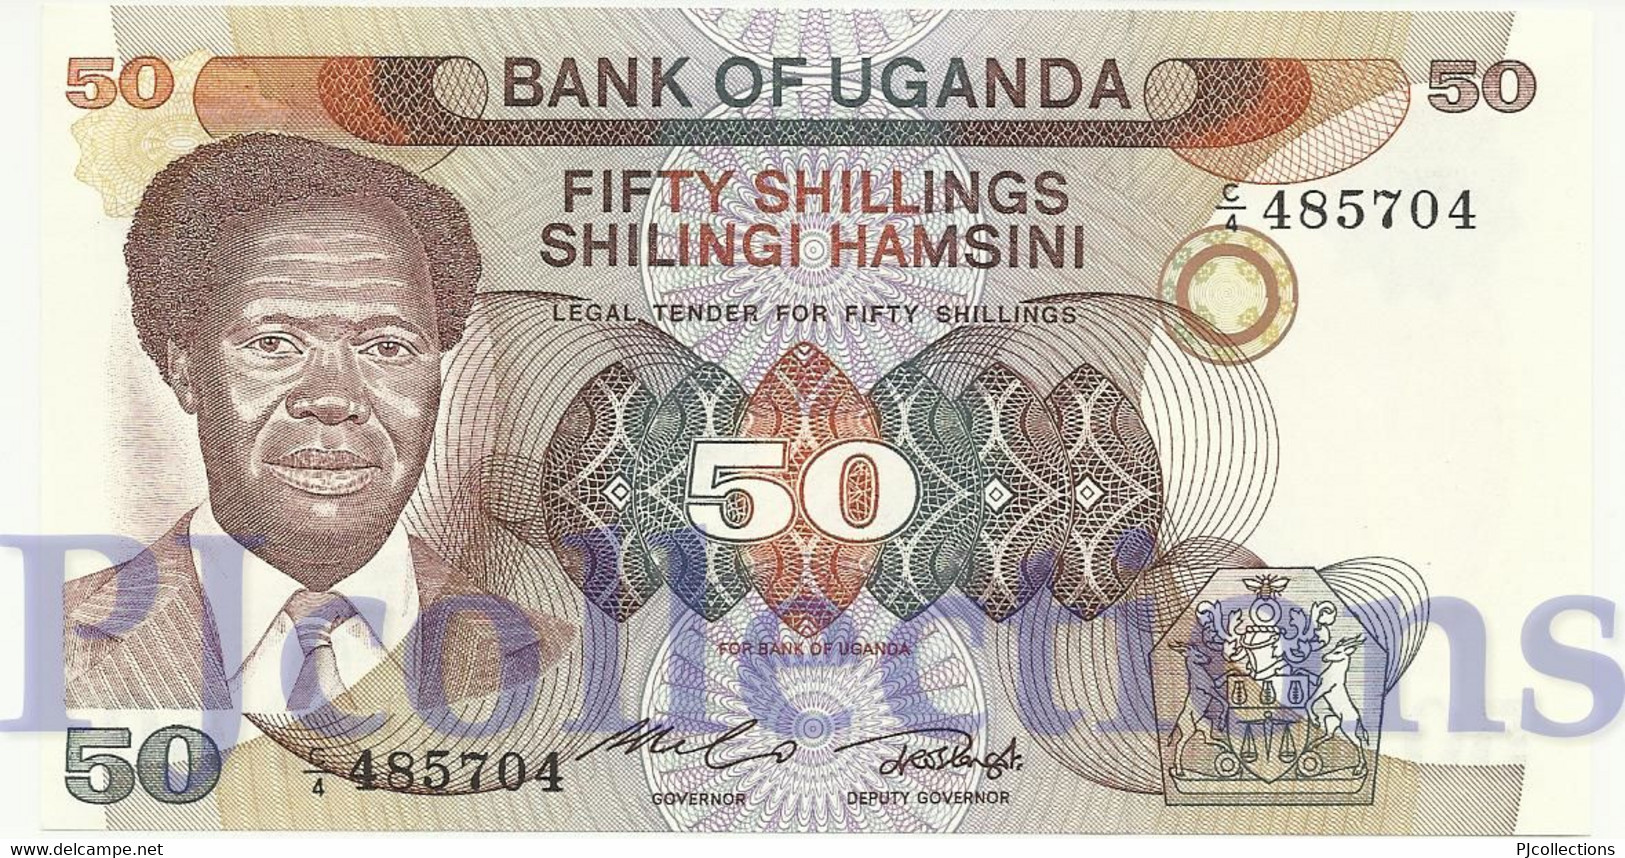 LOT UGANDA 50 SHILLINGS 1985 PICK 20 UNC X 5 PCS - Uganda